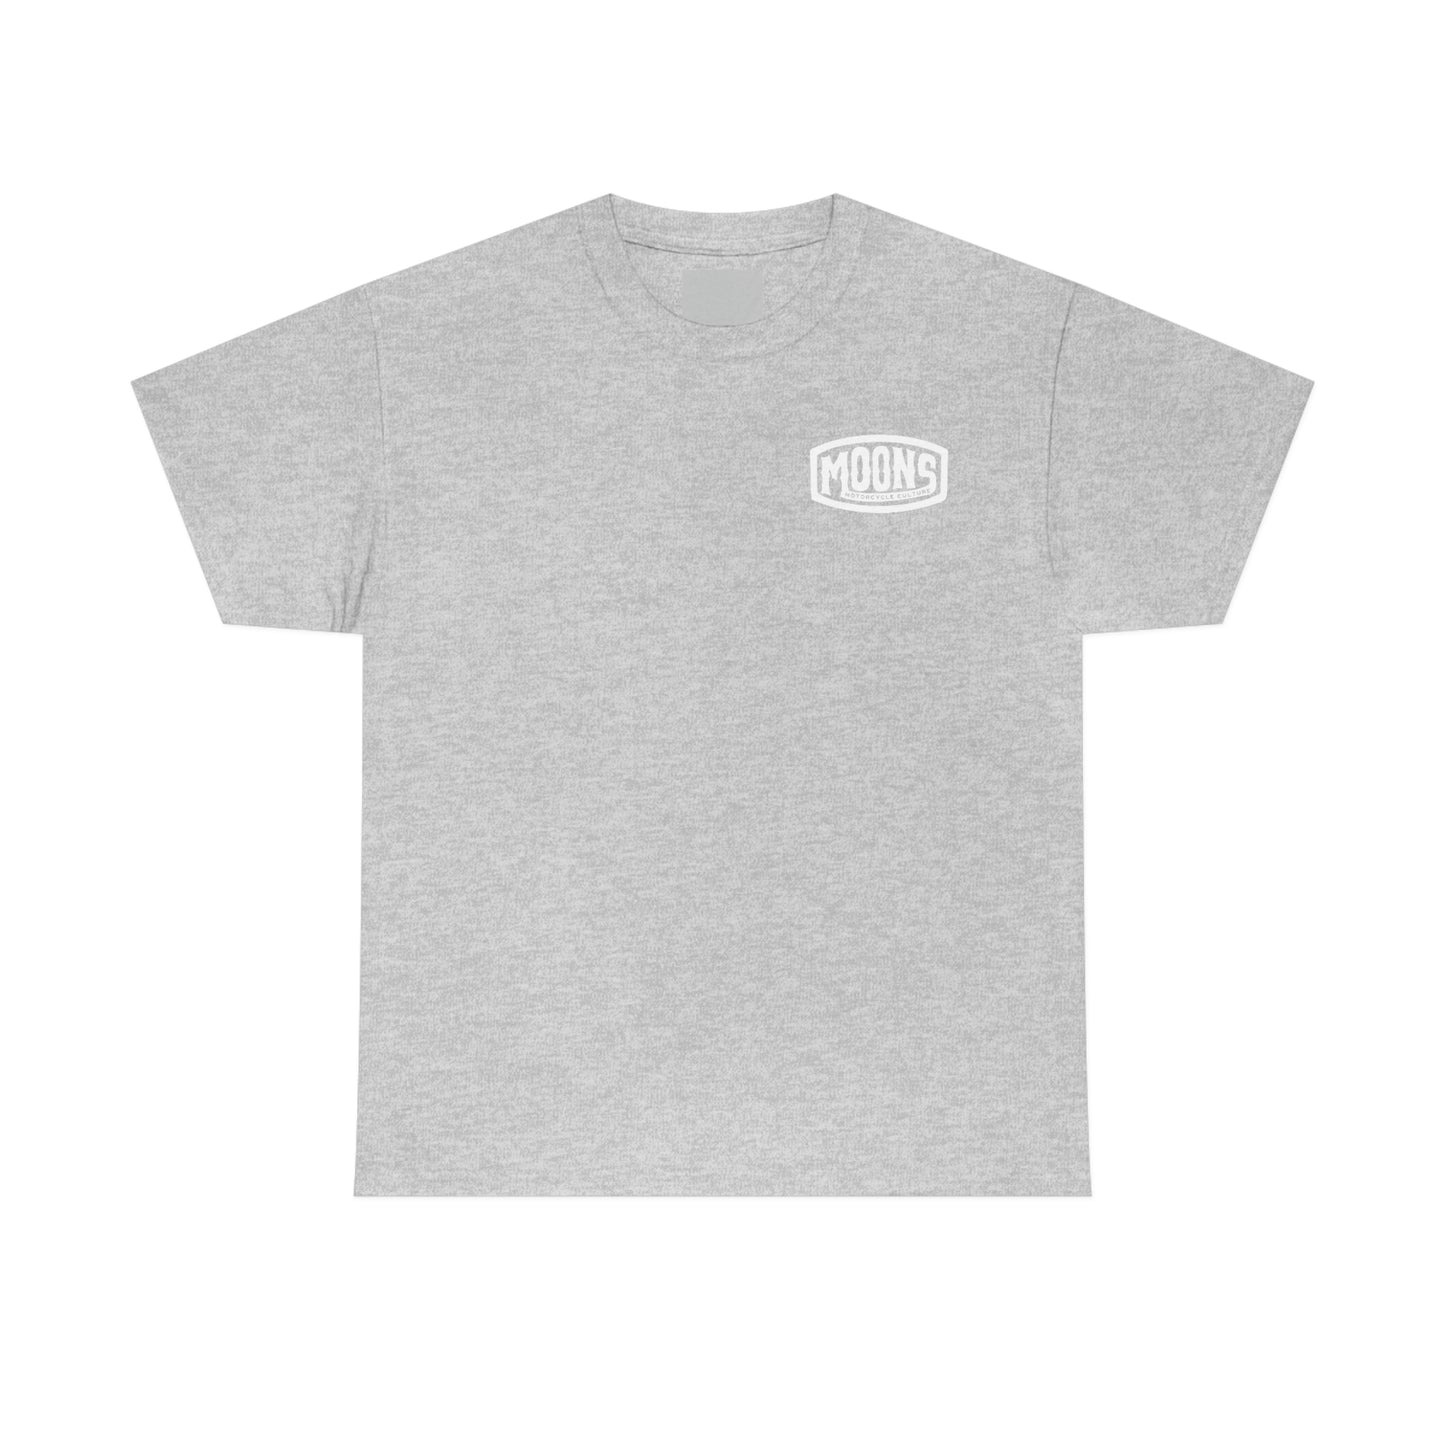 MOONSMC® Vintage Badge White Logo T-Shirt